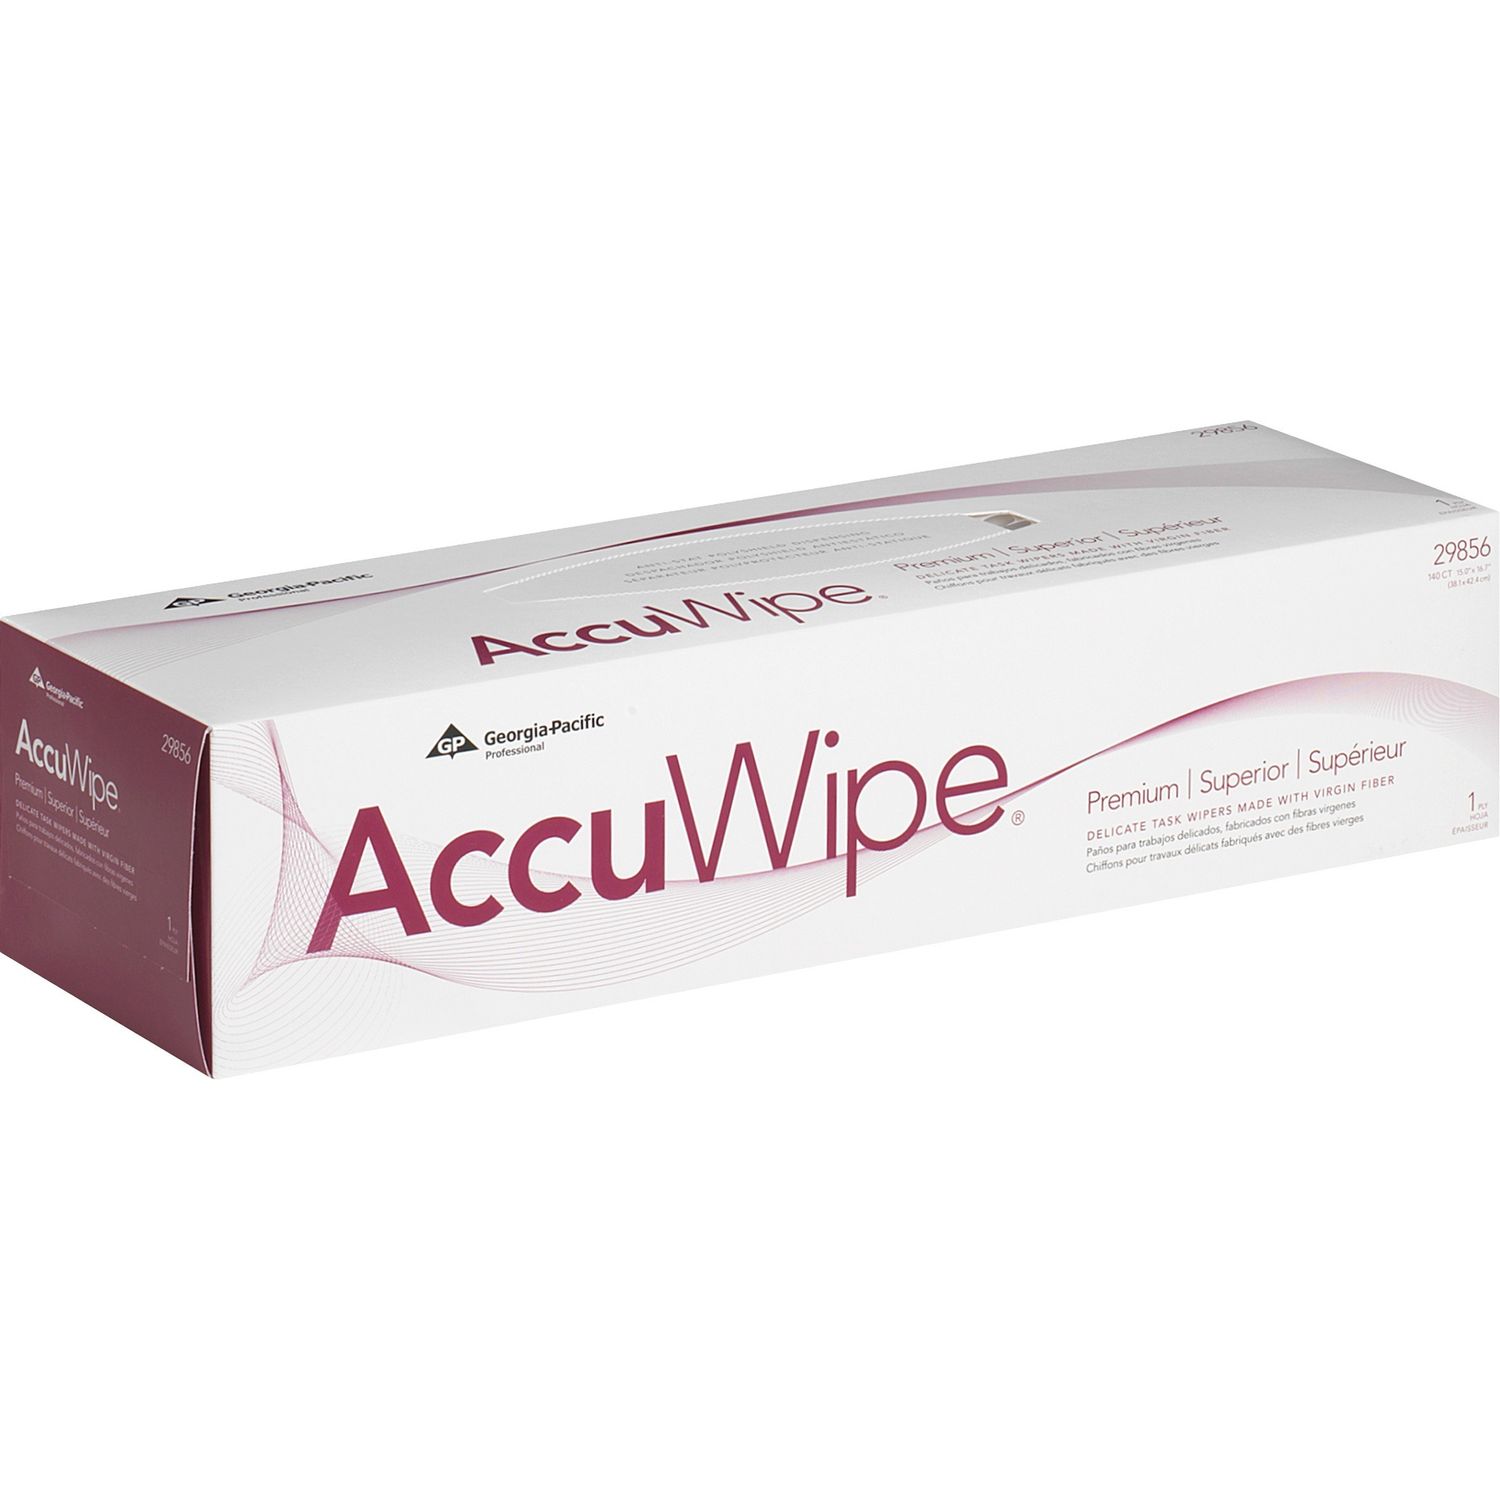 Accuwipe Premium 1-Ply Disposable Delicate Task Wiper For Electronic Equipment, Soft, Non-abrasive, Absorbent, Streak-free, Disposable, Virgin Fiber, 15 / Box, 225 / Carton, White